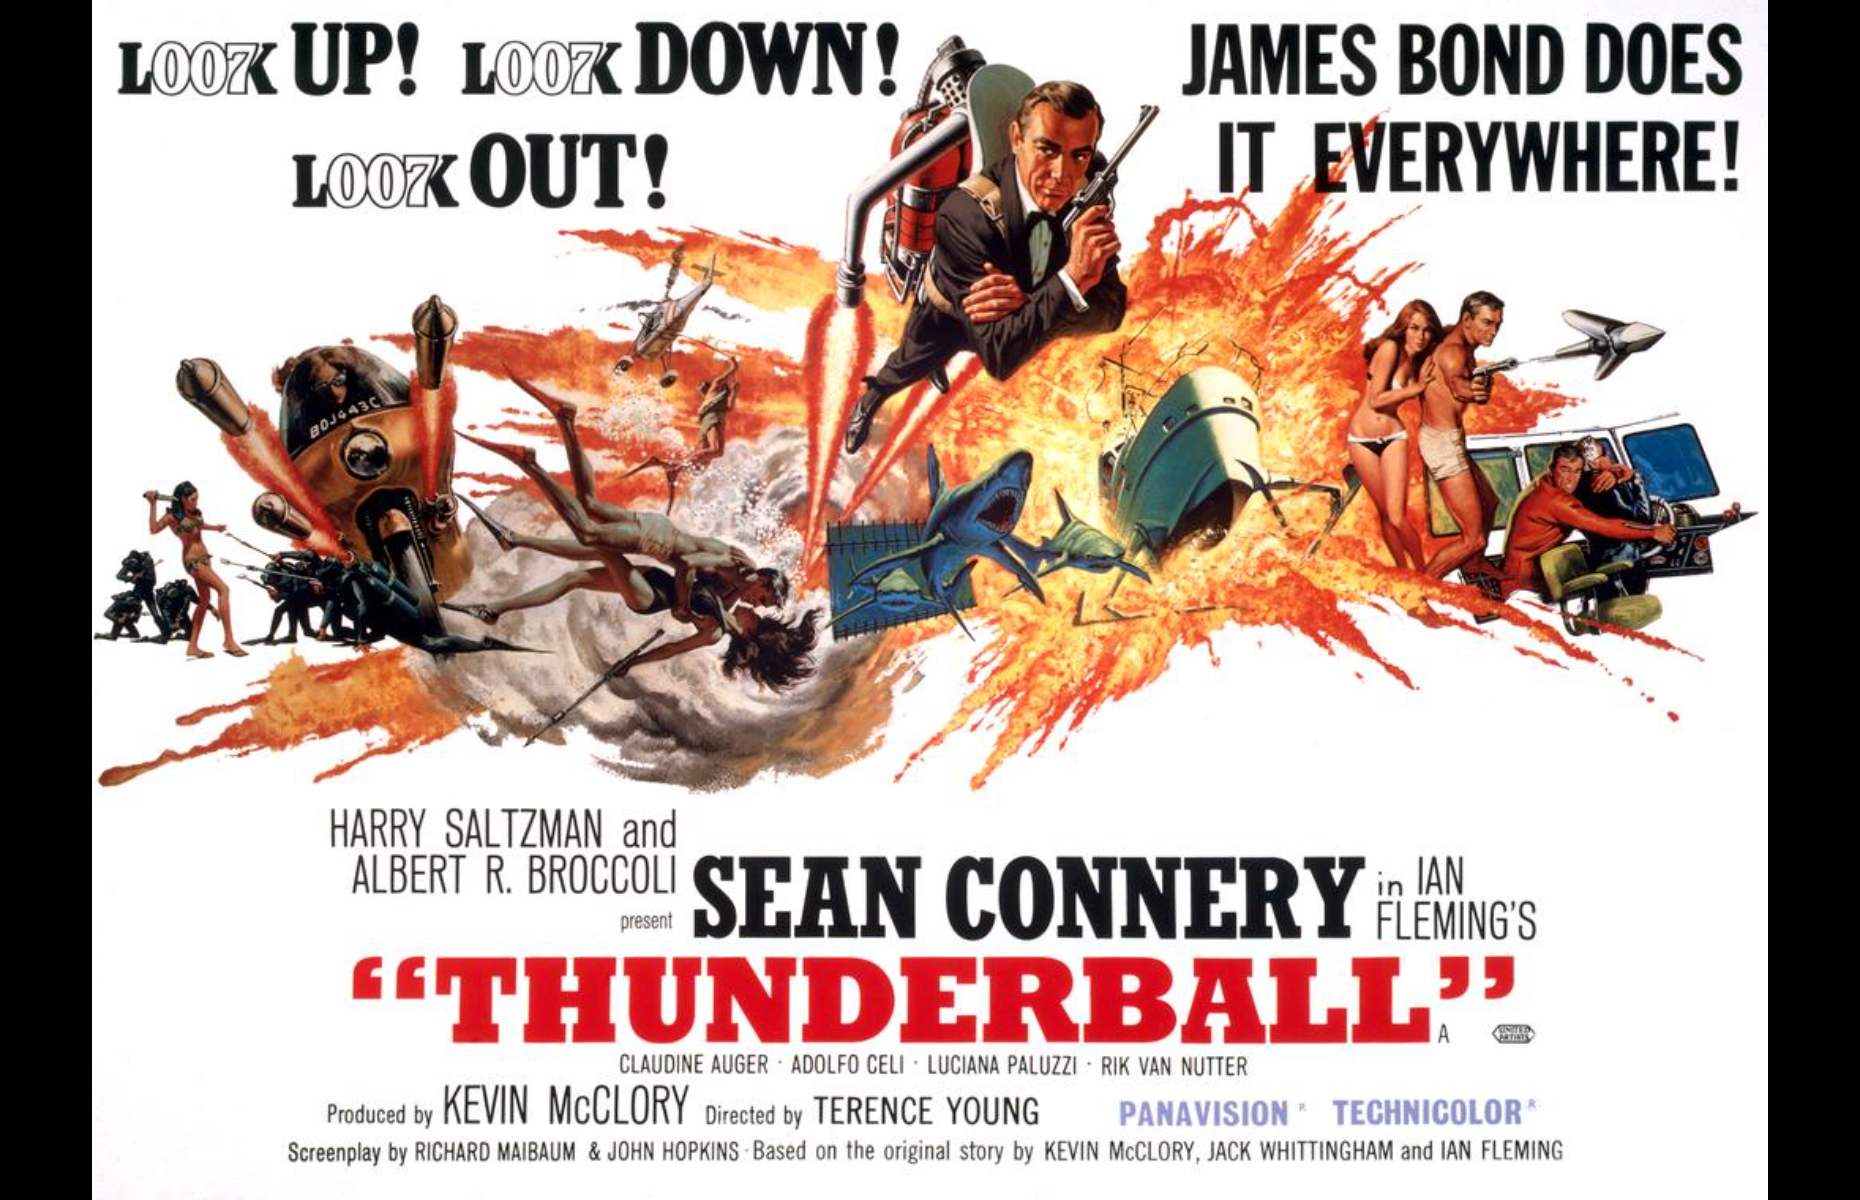 2nd: Thunderball, $1.3 billion (£990.3m)